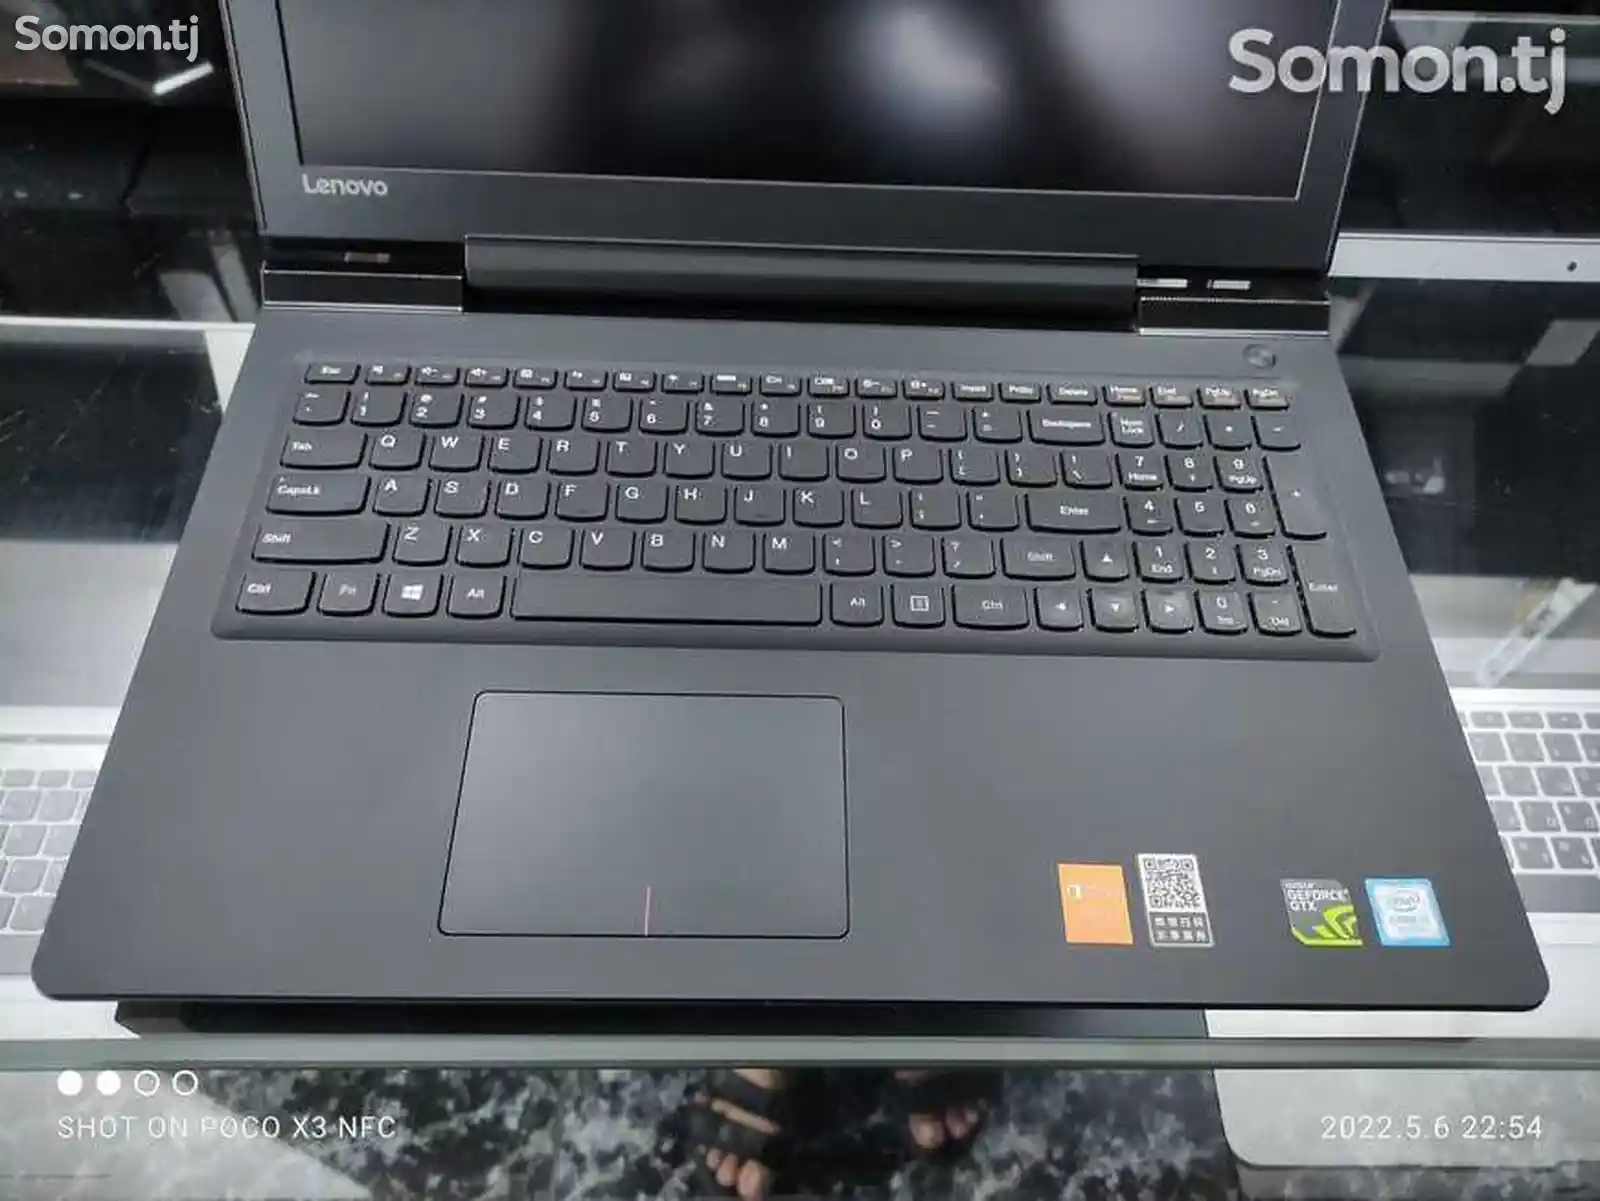 Игровой ноутбук Lenovo 700 Gaming Core i5-6300HQ GTX 950M 4GB 6TH GEN-4